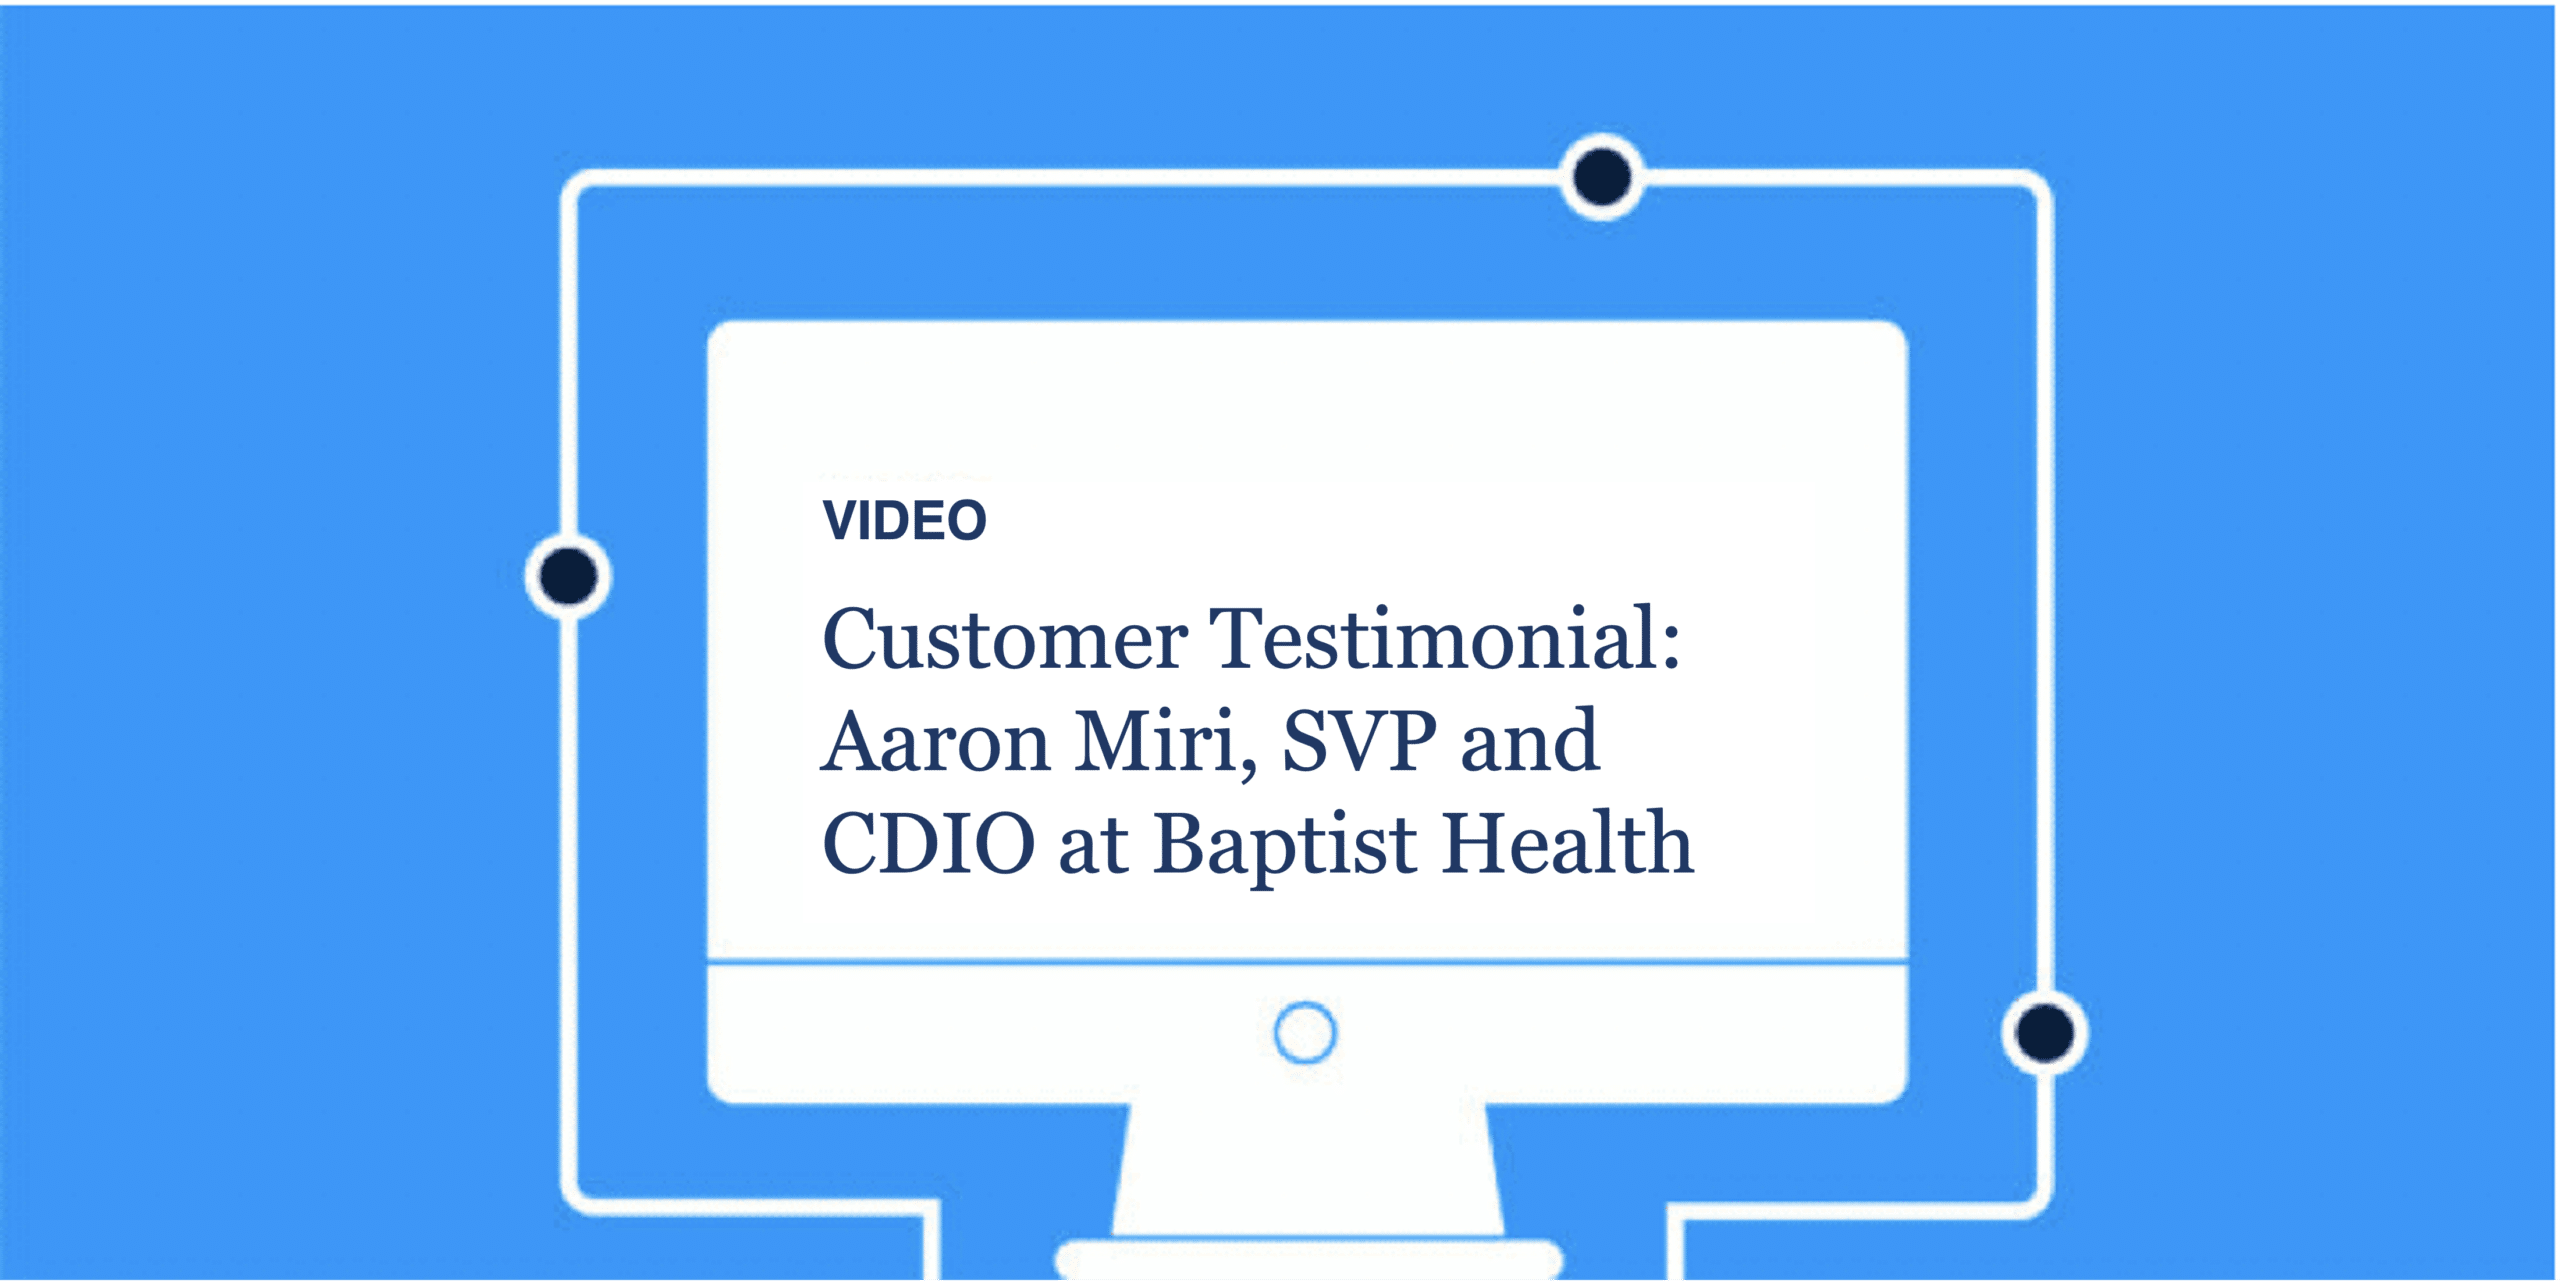 Customer Testimonial: Aaron Miri, SVP and CDIO at Baptist Health